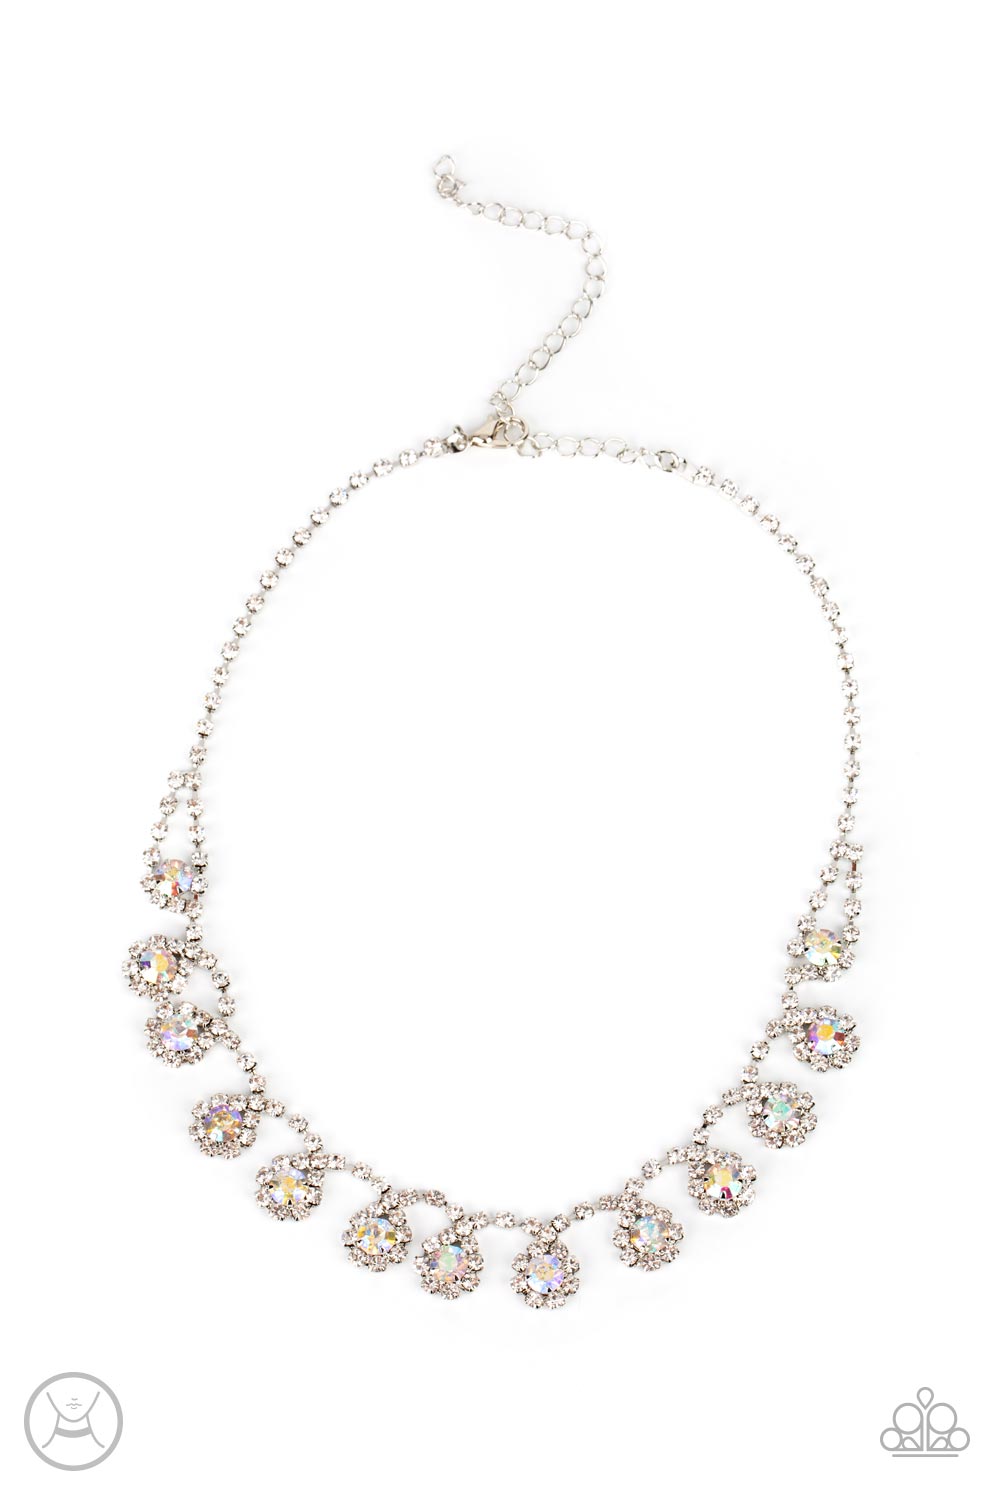 Princess Prominence - White Iridescent Rhinestone Choker Necklace - Paparazzi Accessories